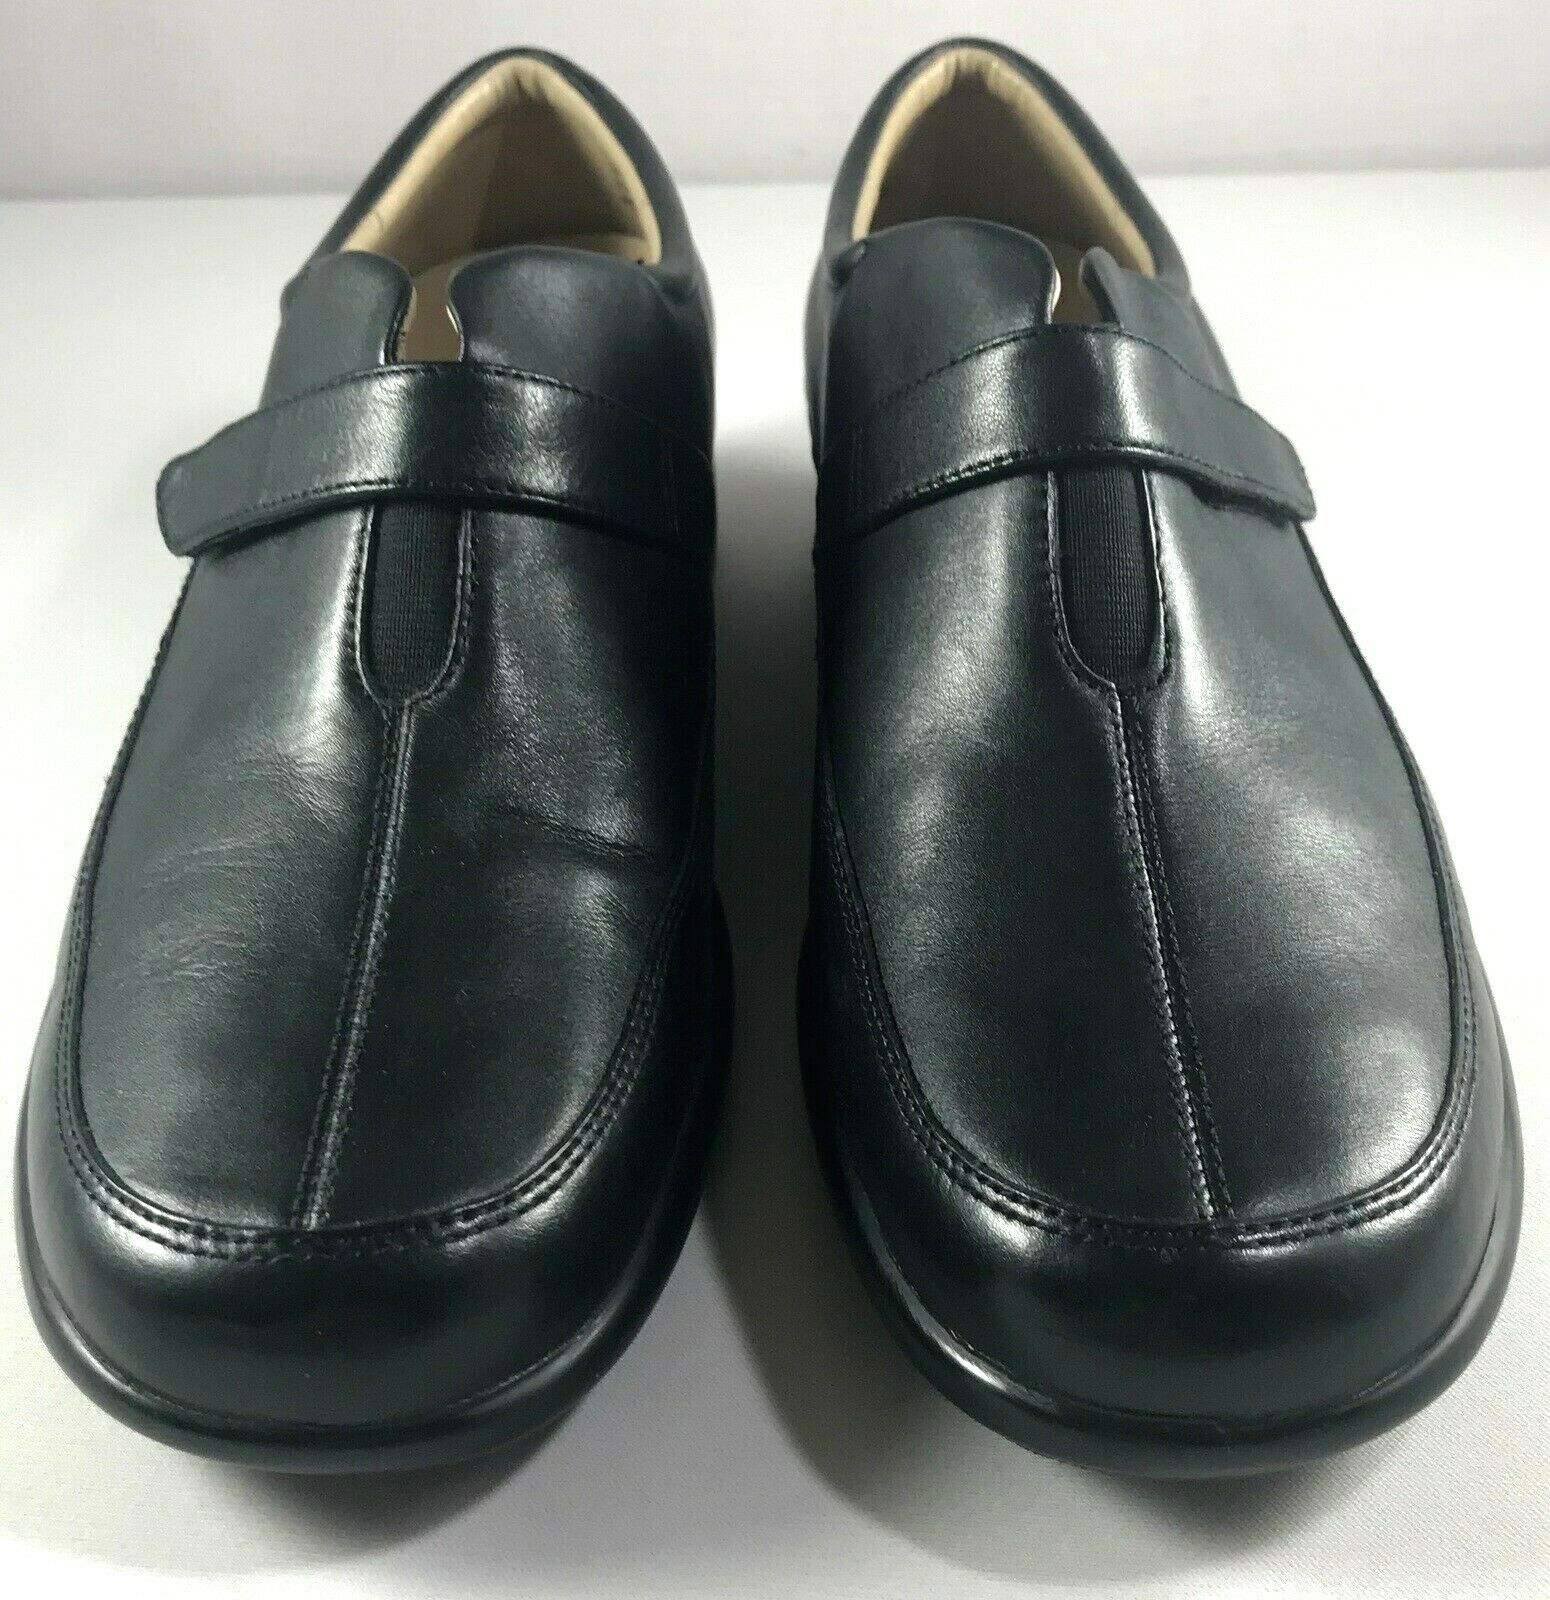 Relano Dress Walking Shoes Womens Black Leather Comfort Orthopedic Size 11 W